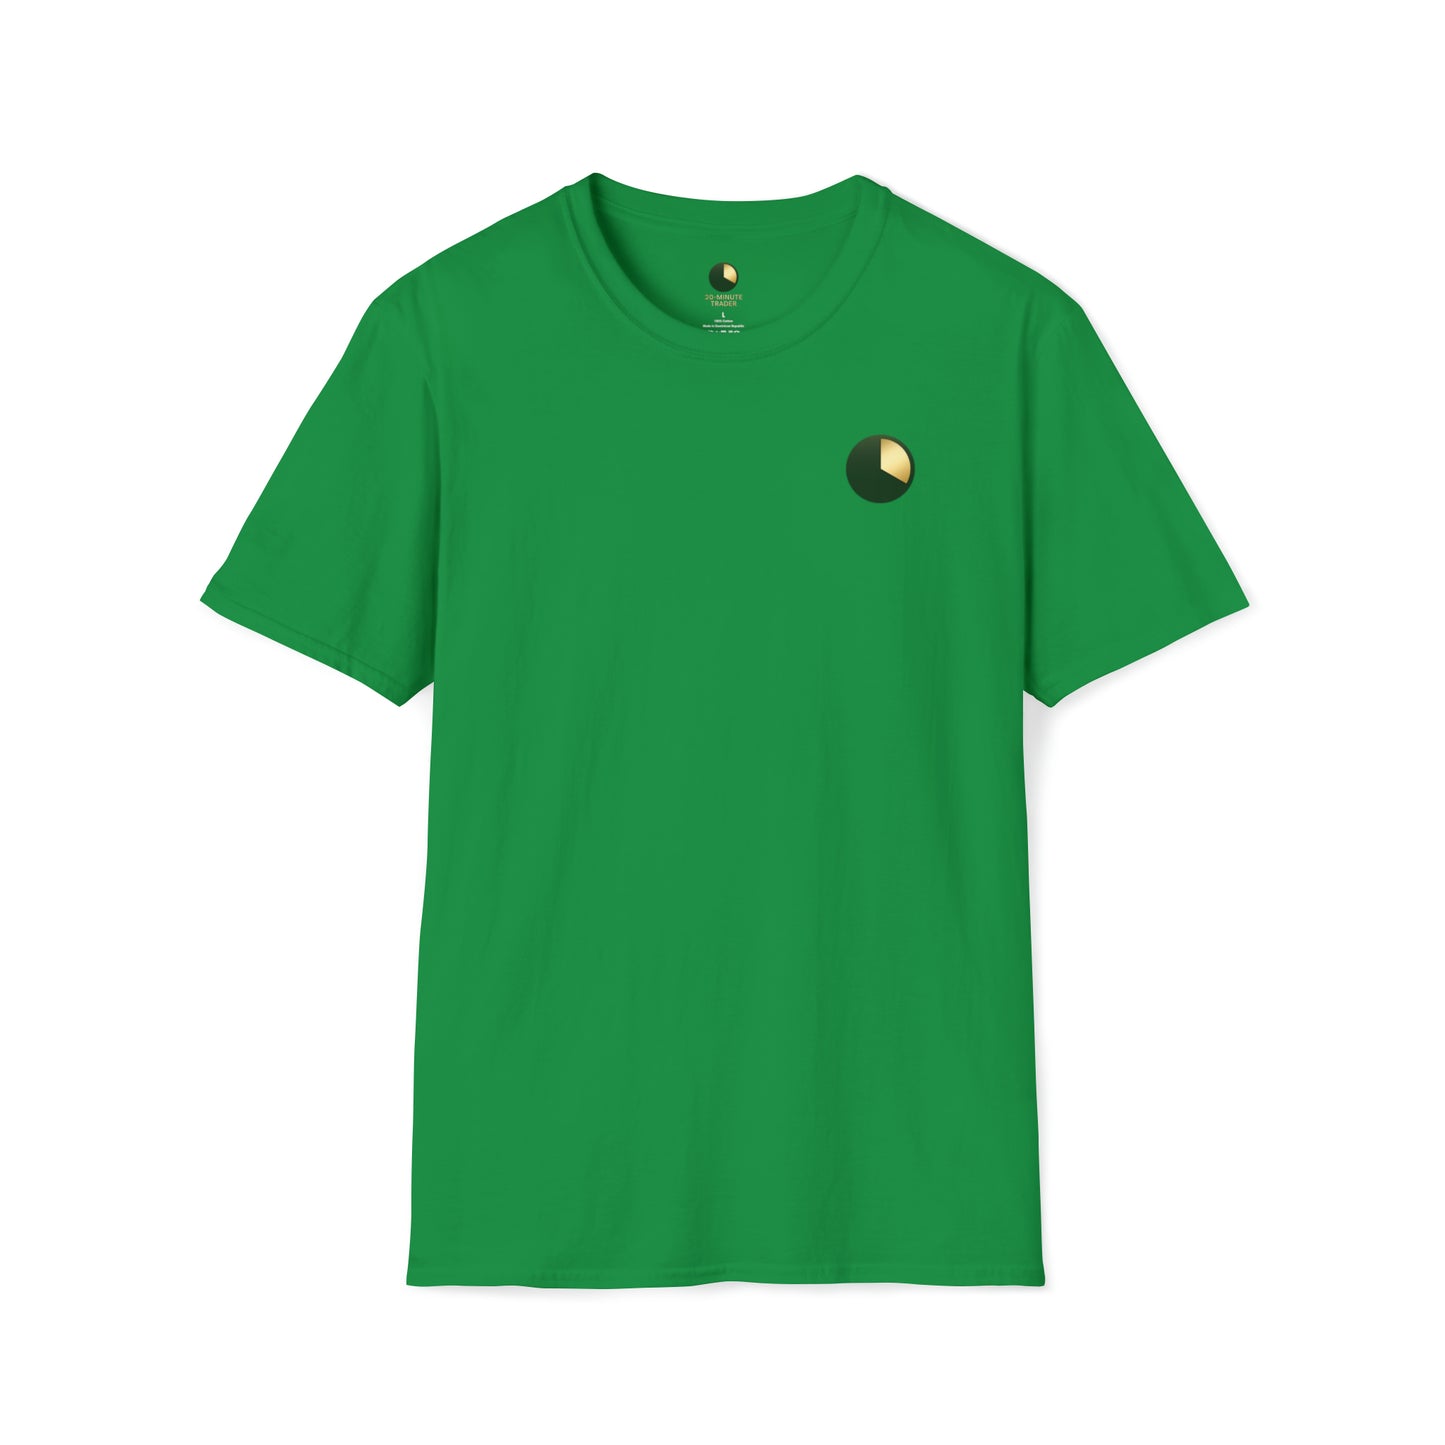 20-Minute Trader® Clock Logo Unisex Soft-Style T-Shirt